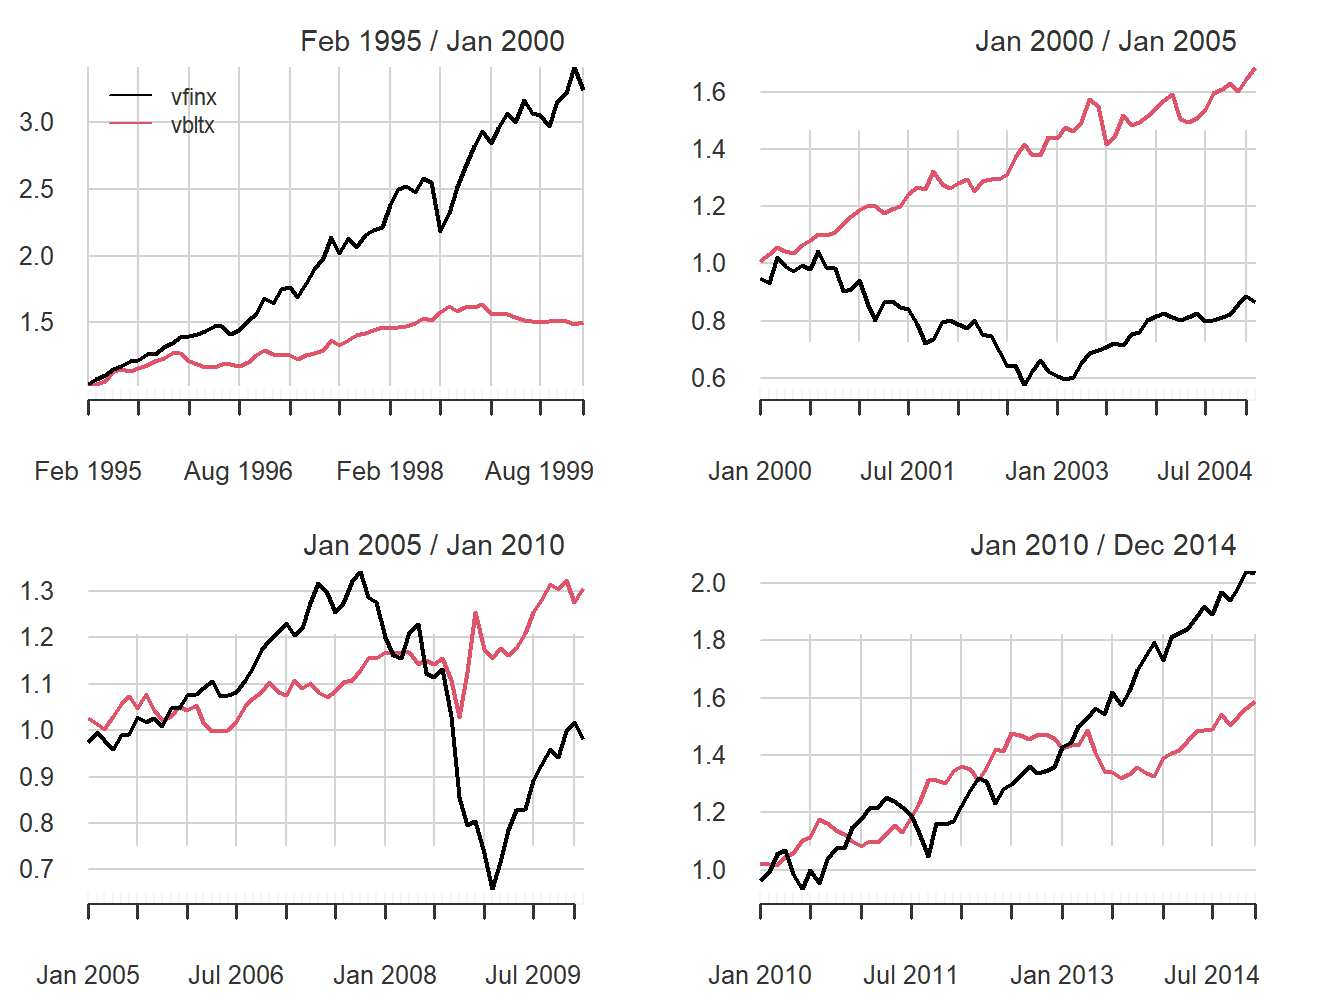 Equity curves for stock (vfinx) and bond (vbltx) portfolios over sub-periods.